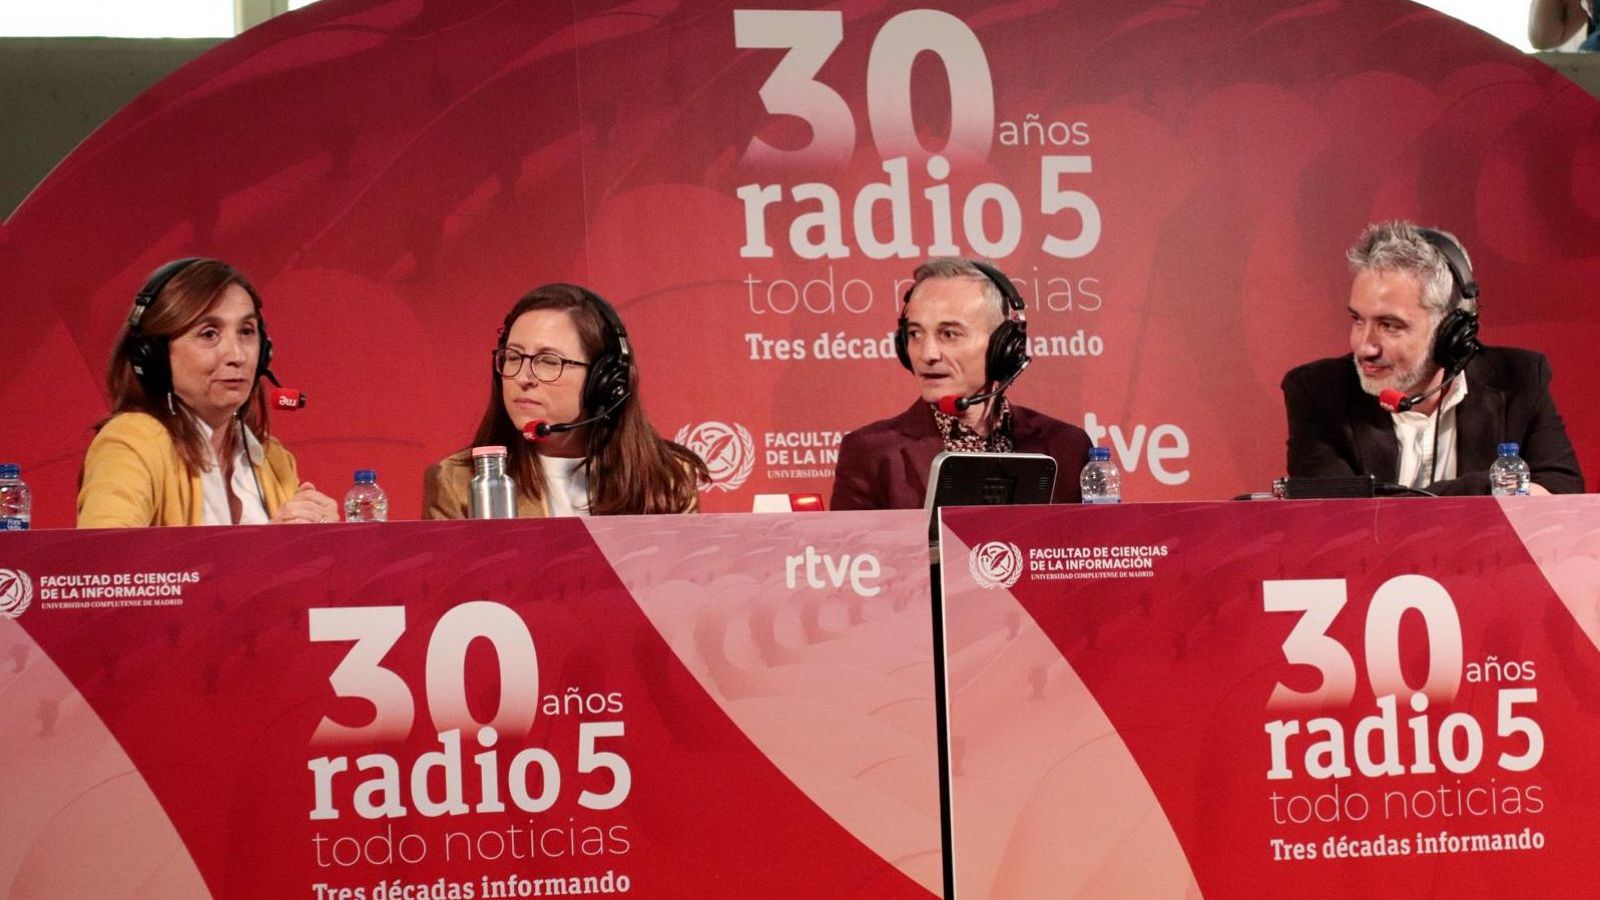 Radio 5 Todo Noticias celebra su 30 aniversario